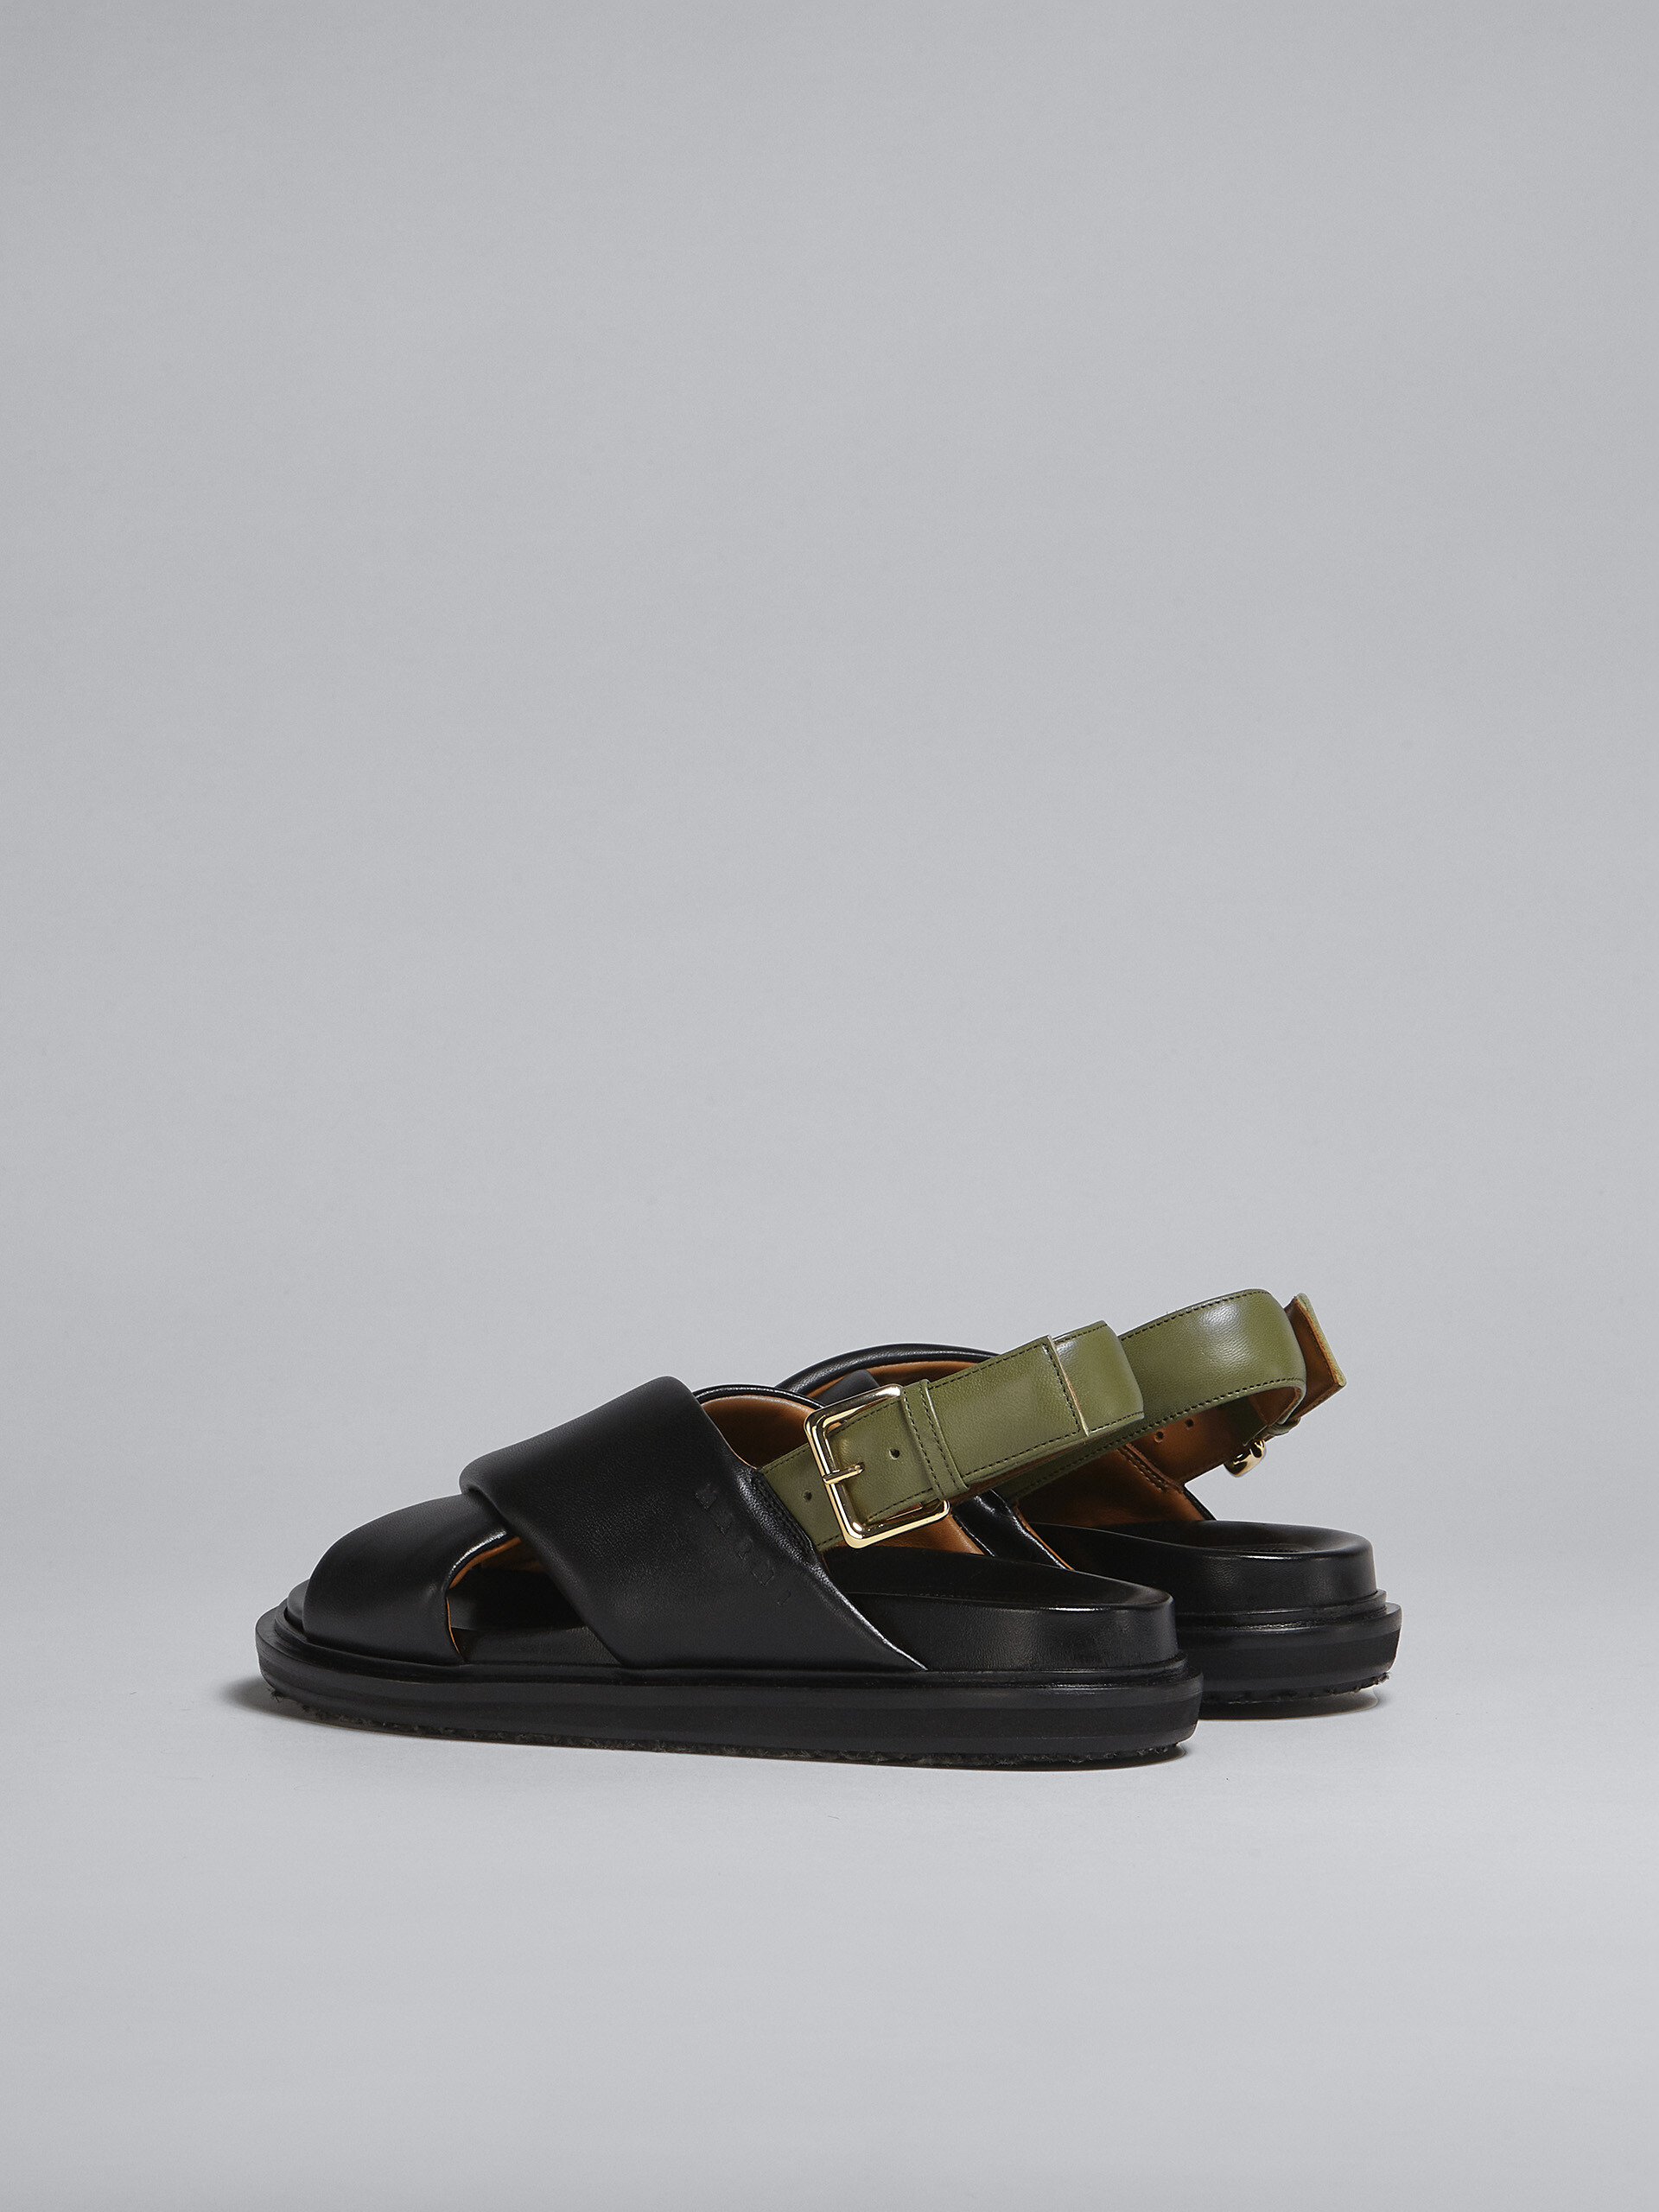 Sandales fussbett en cuir noir et vert - Sandales - Image 3